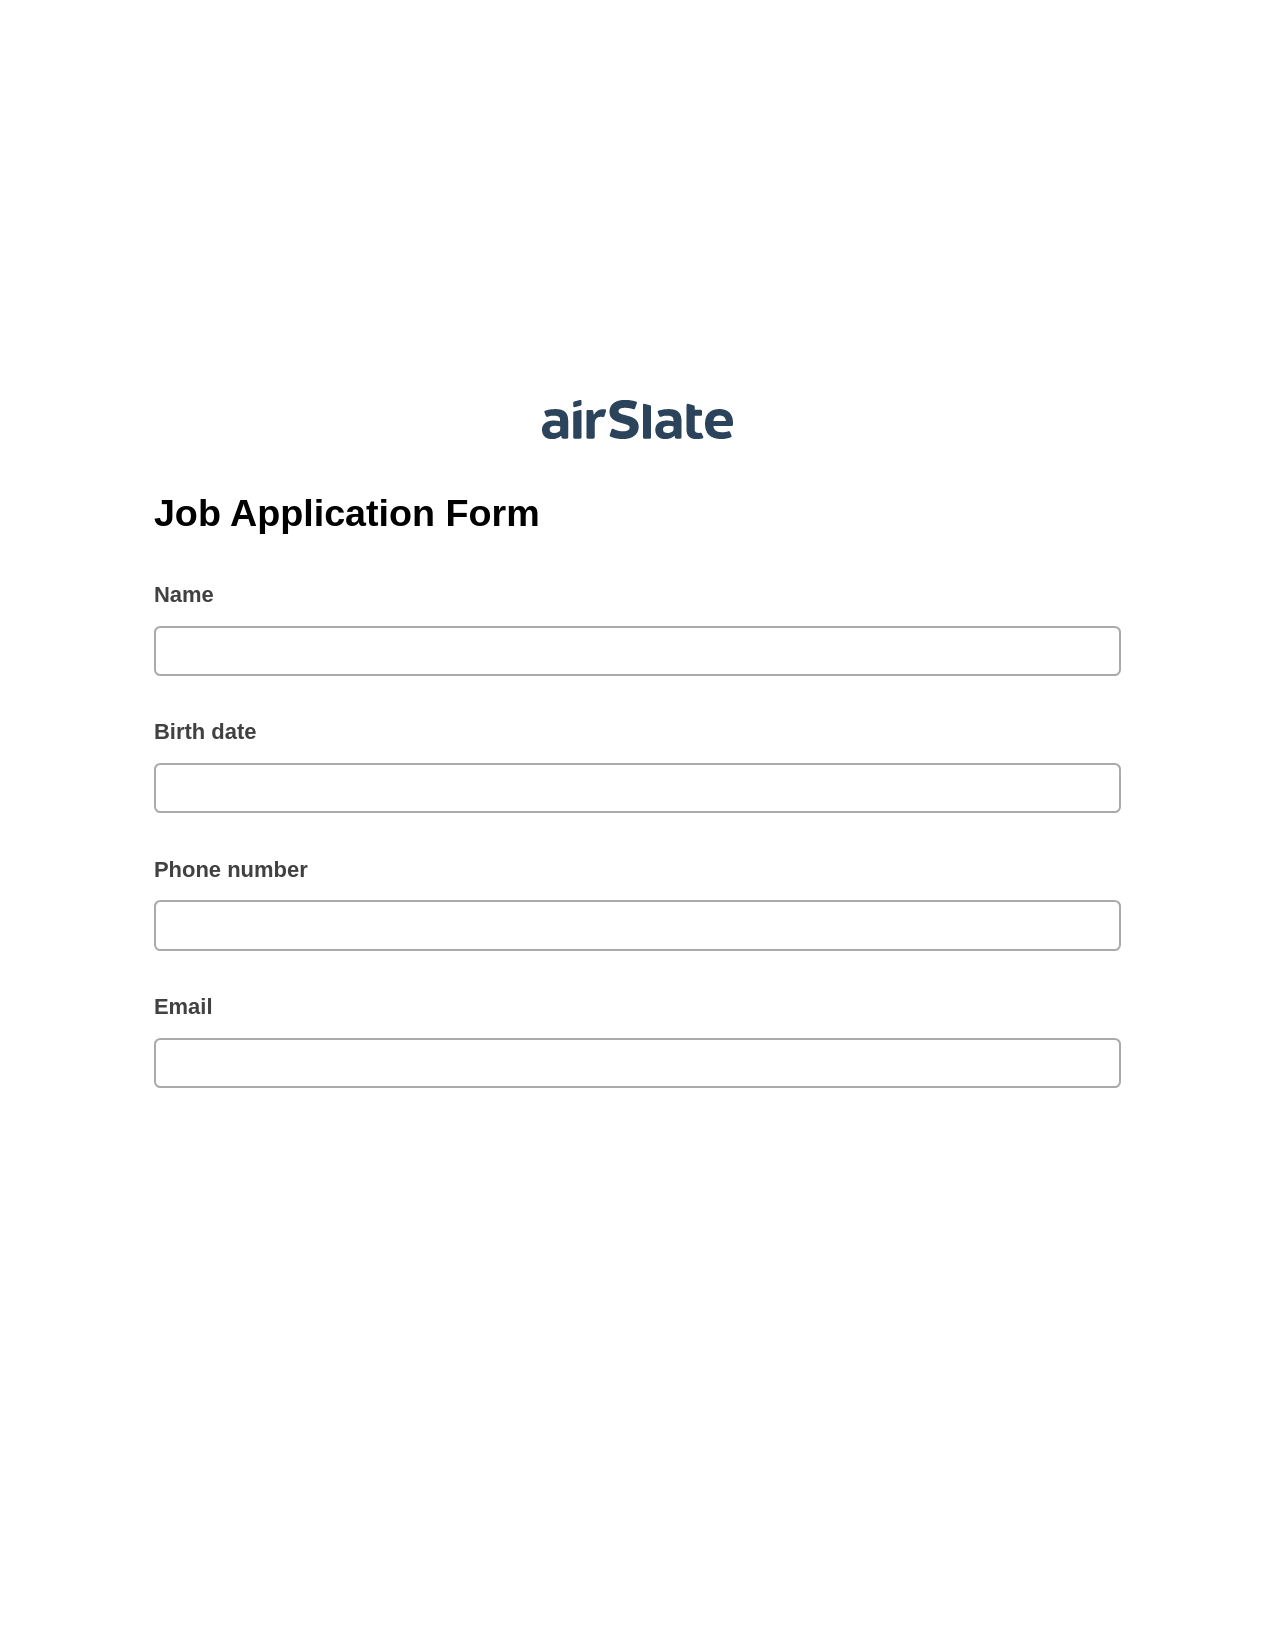 Job Application Form Pre-fill from Salesforce Record Bot, Mailchimp send Campaign bot, Webhook Postfinish Bot